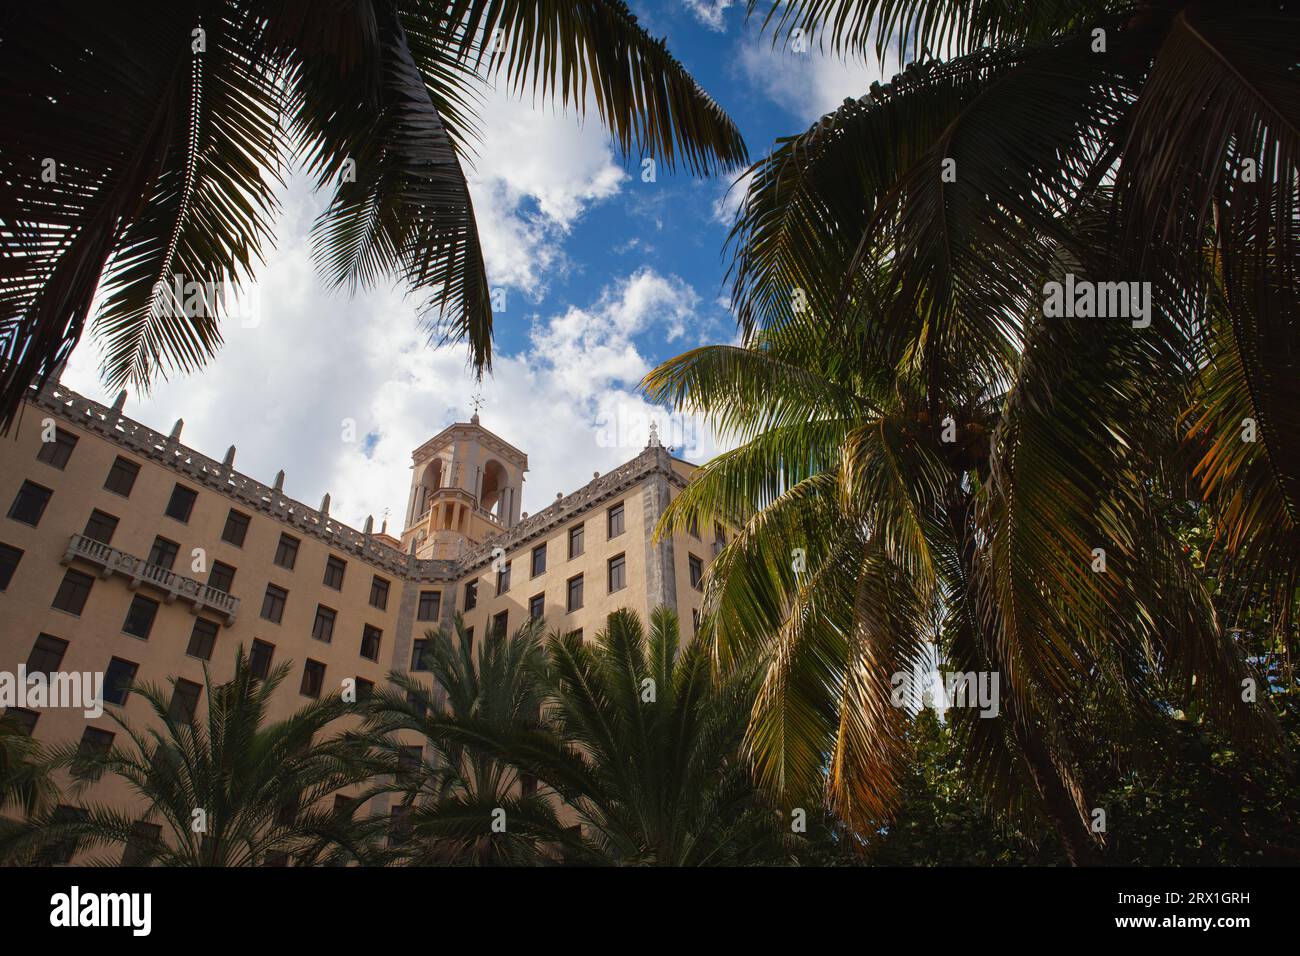 hotel Nacional de Cuba is a historic Spanish eclectic style hote Stock Photo